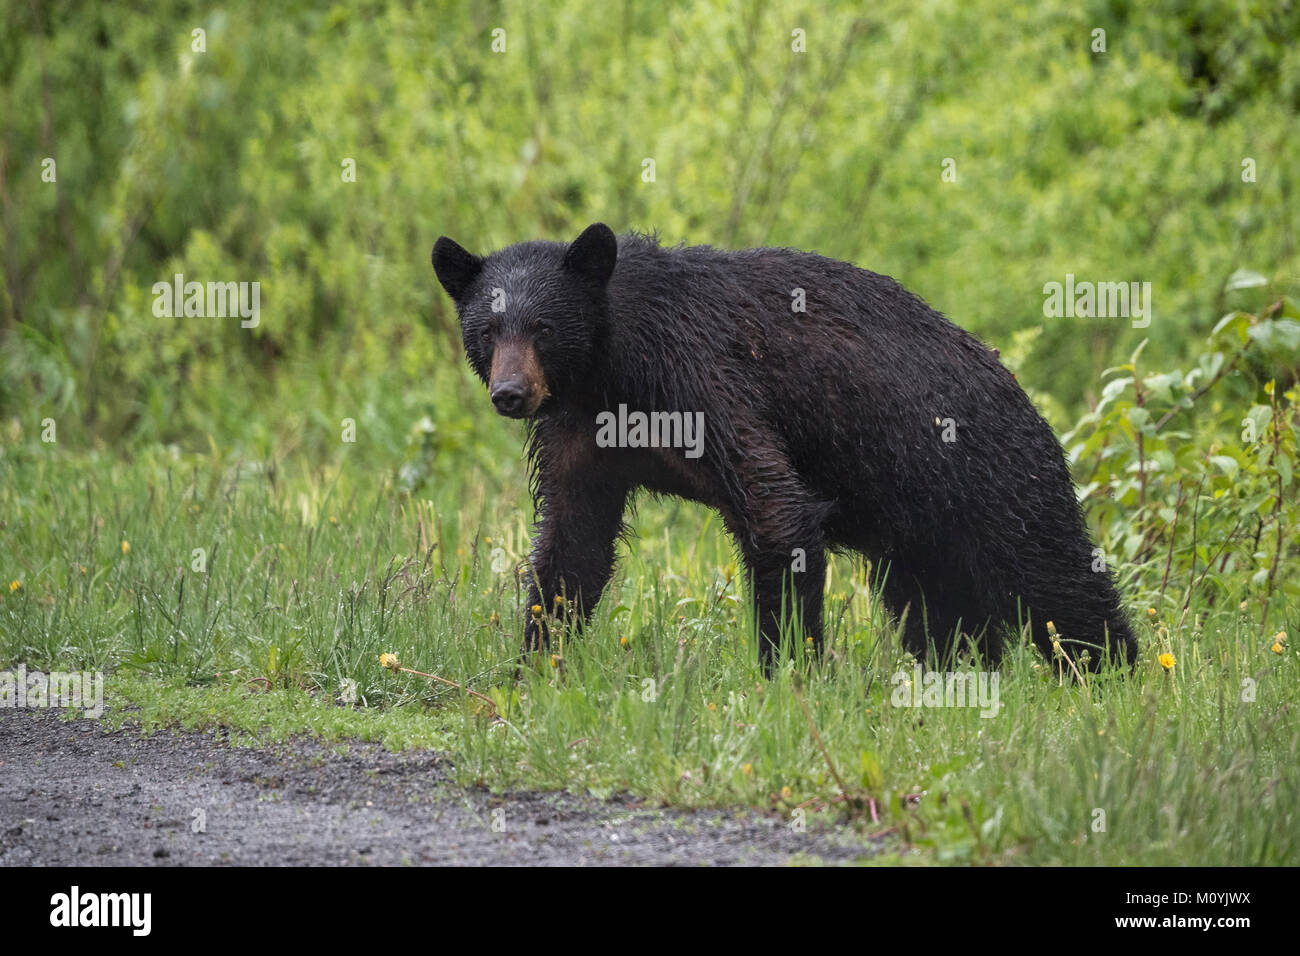 Wet bear standing in grass Stock Photo